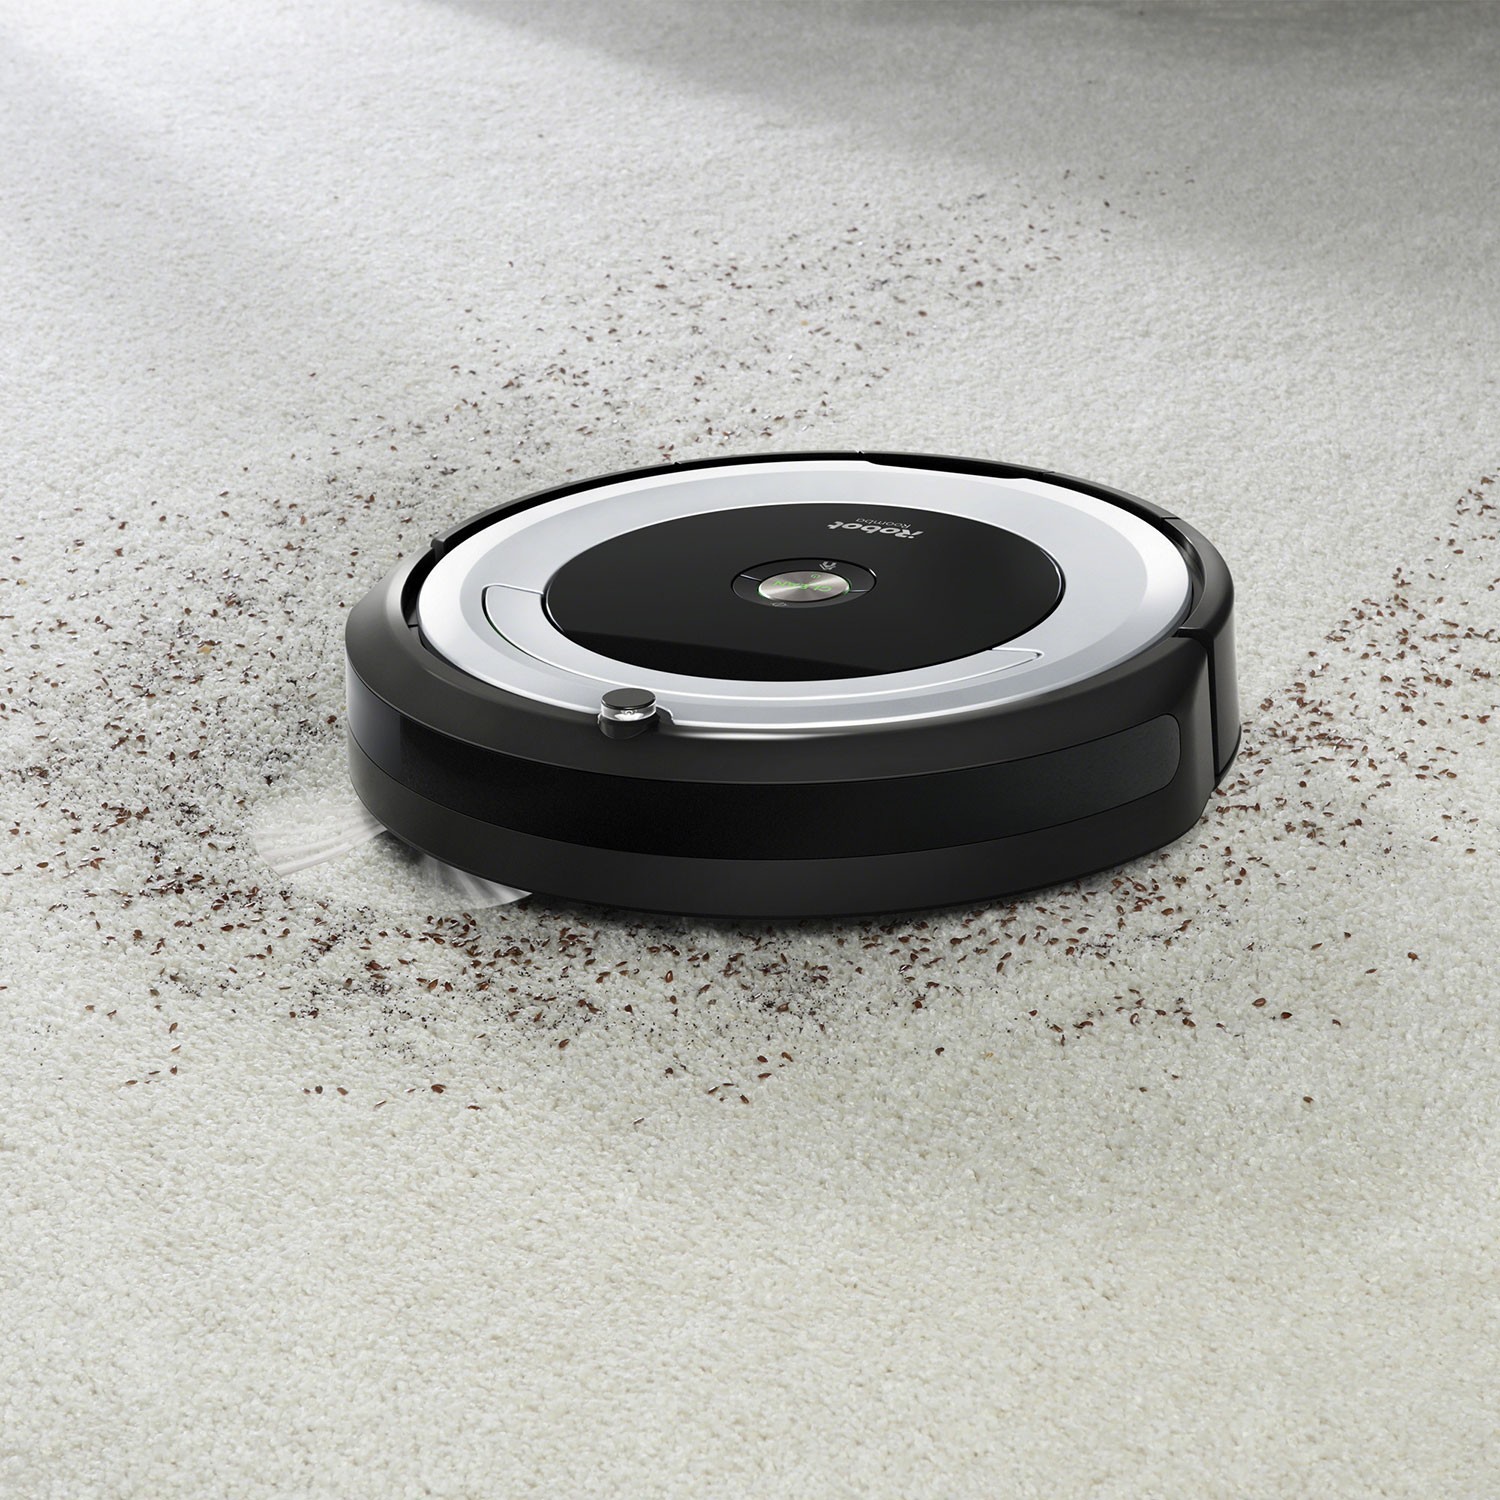 Пылесос iRobot Roomba 695